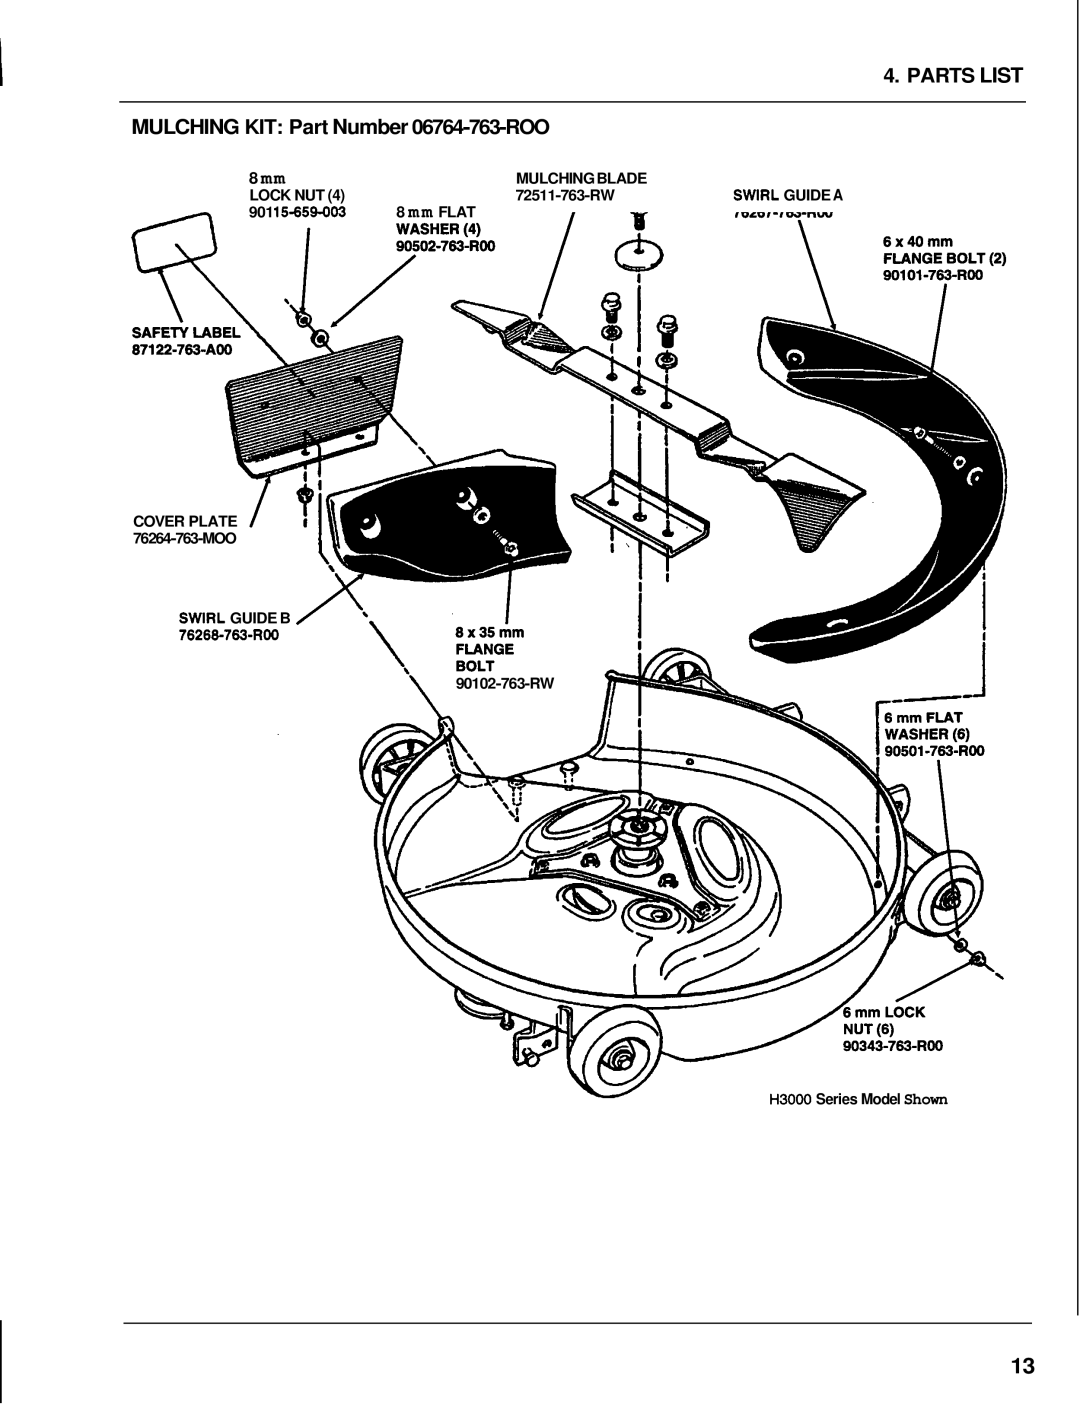 Honda Power Equipment H3000, H1000 Parts List, MULCHING KIT Part Number 06764-763-ROO, 8 mm, Mulchingblade, Swirl Guide A 